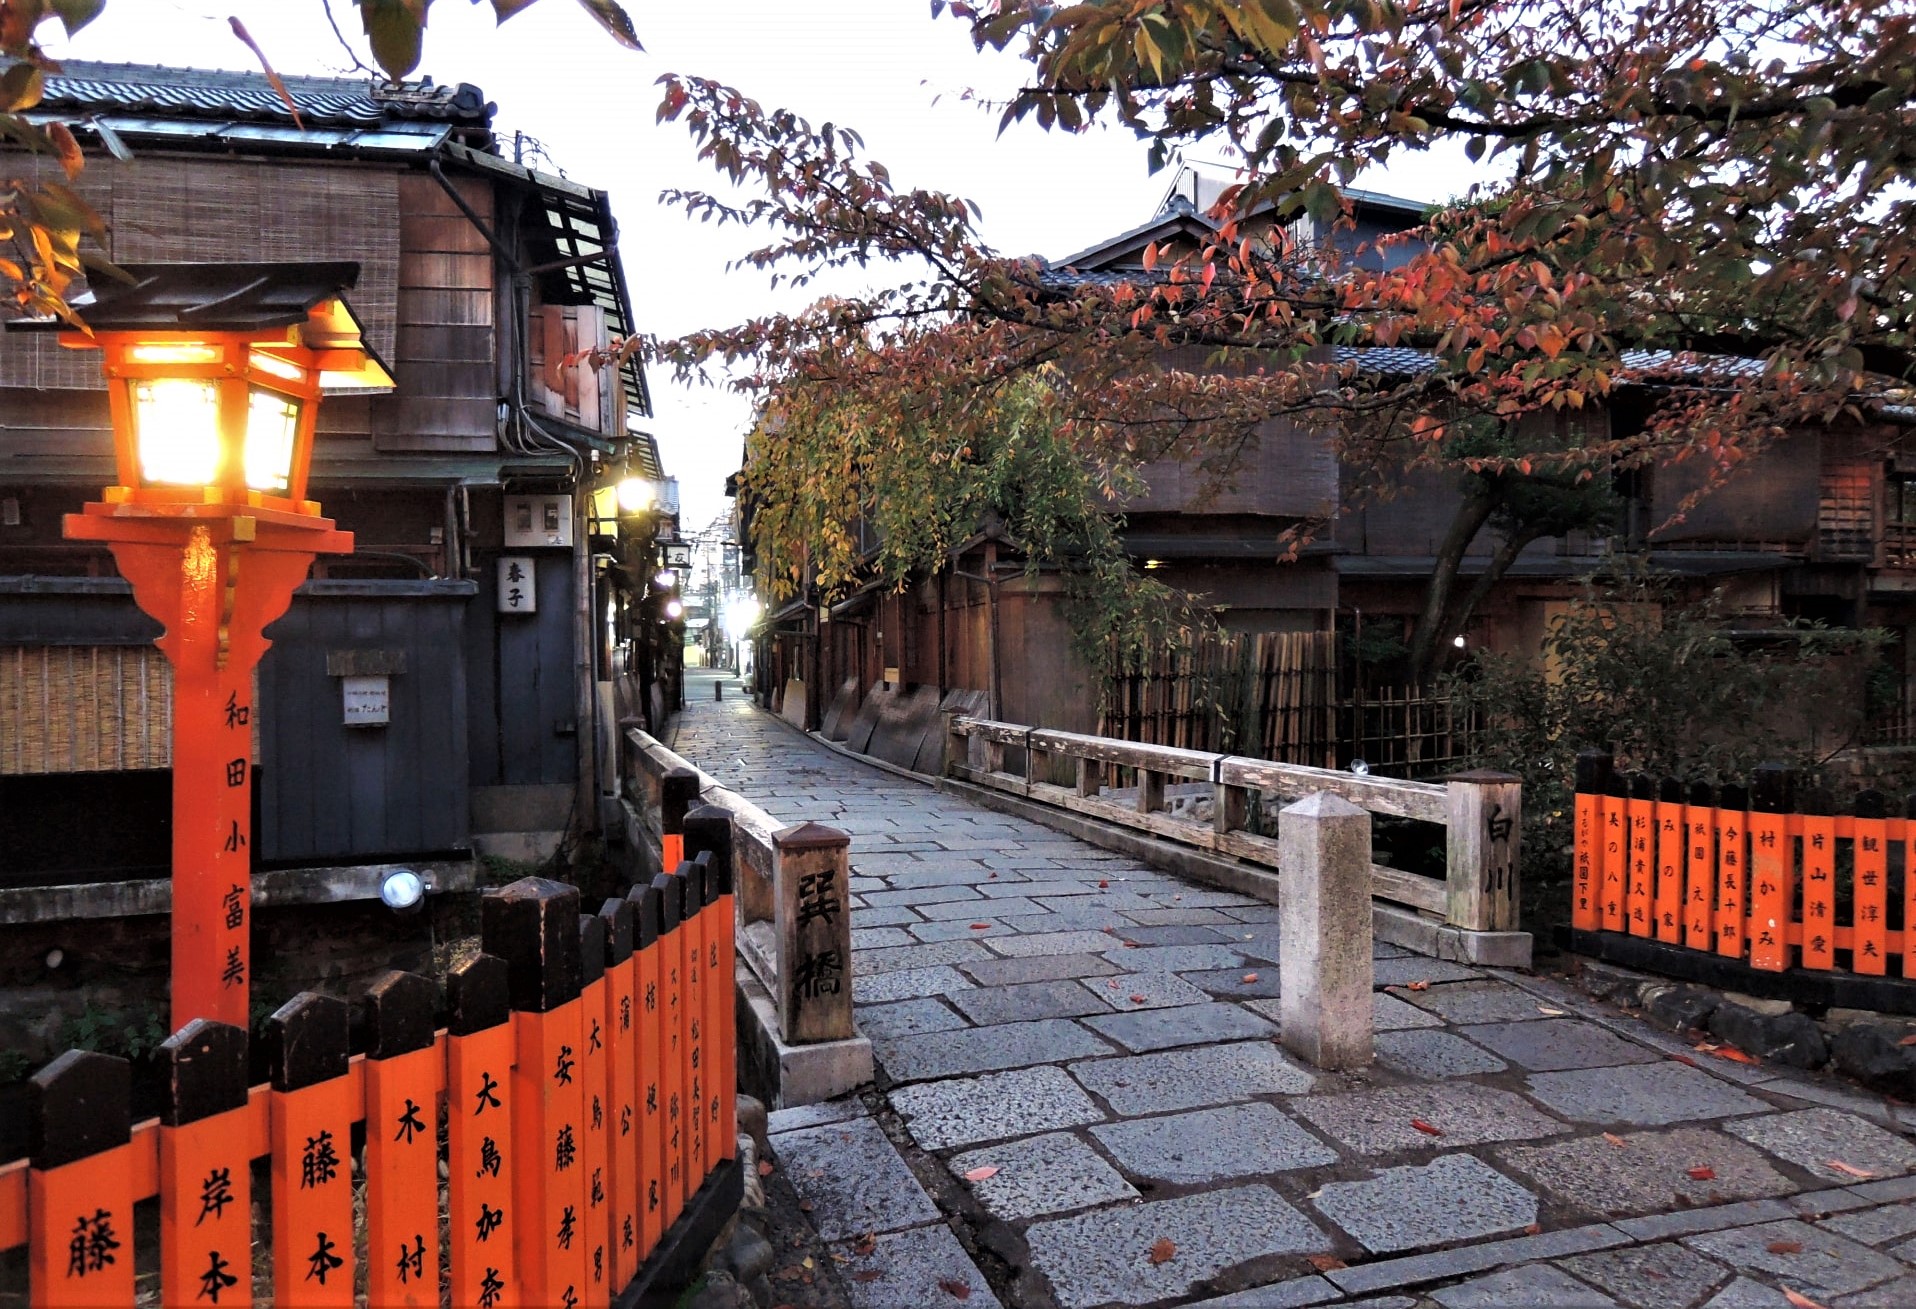 A street of Higashiyama district with the view of Yasaka Pagoda